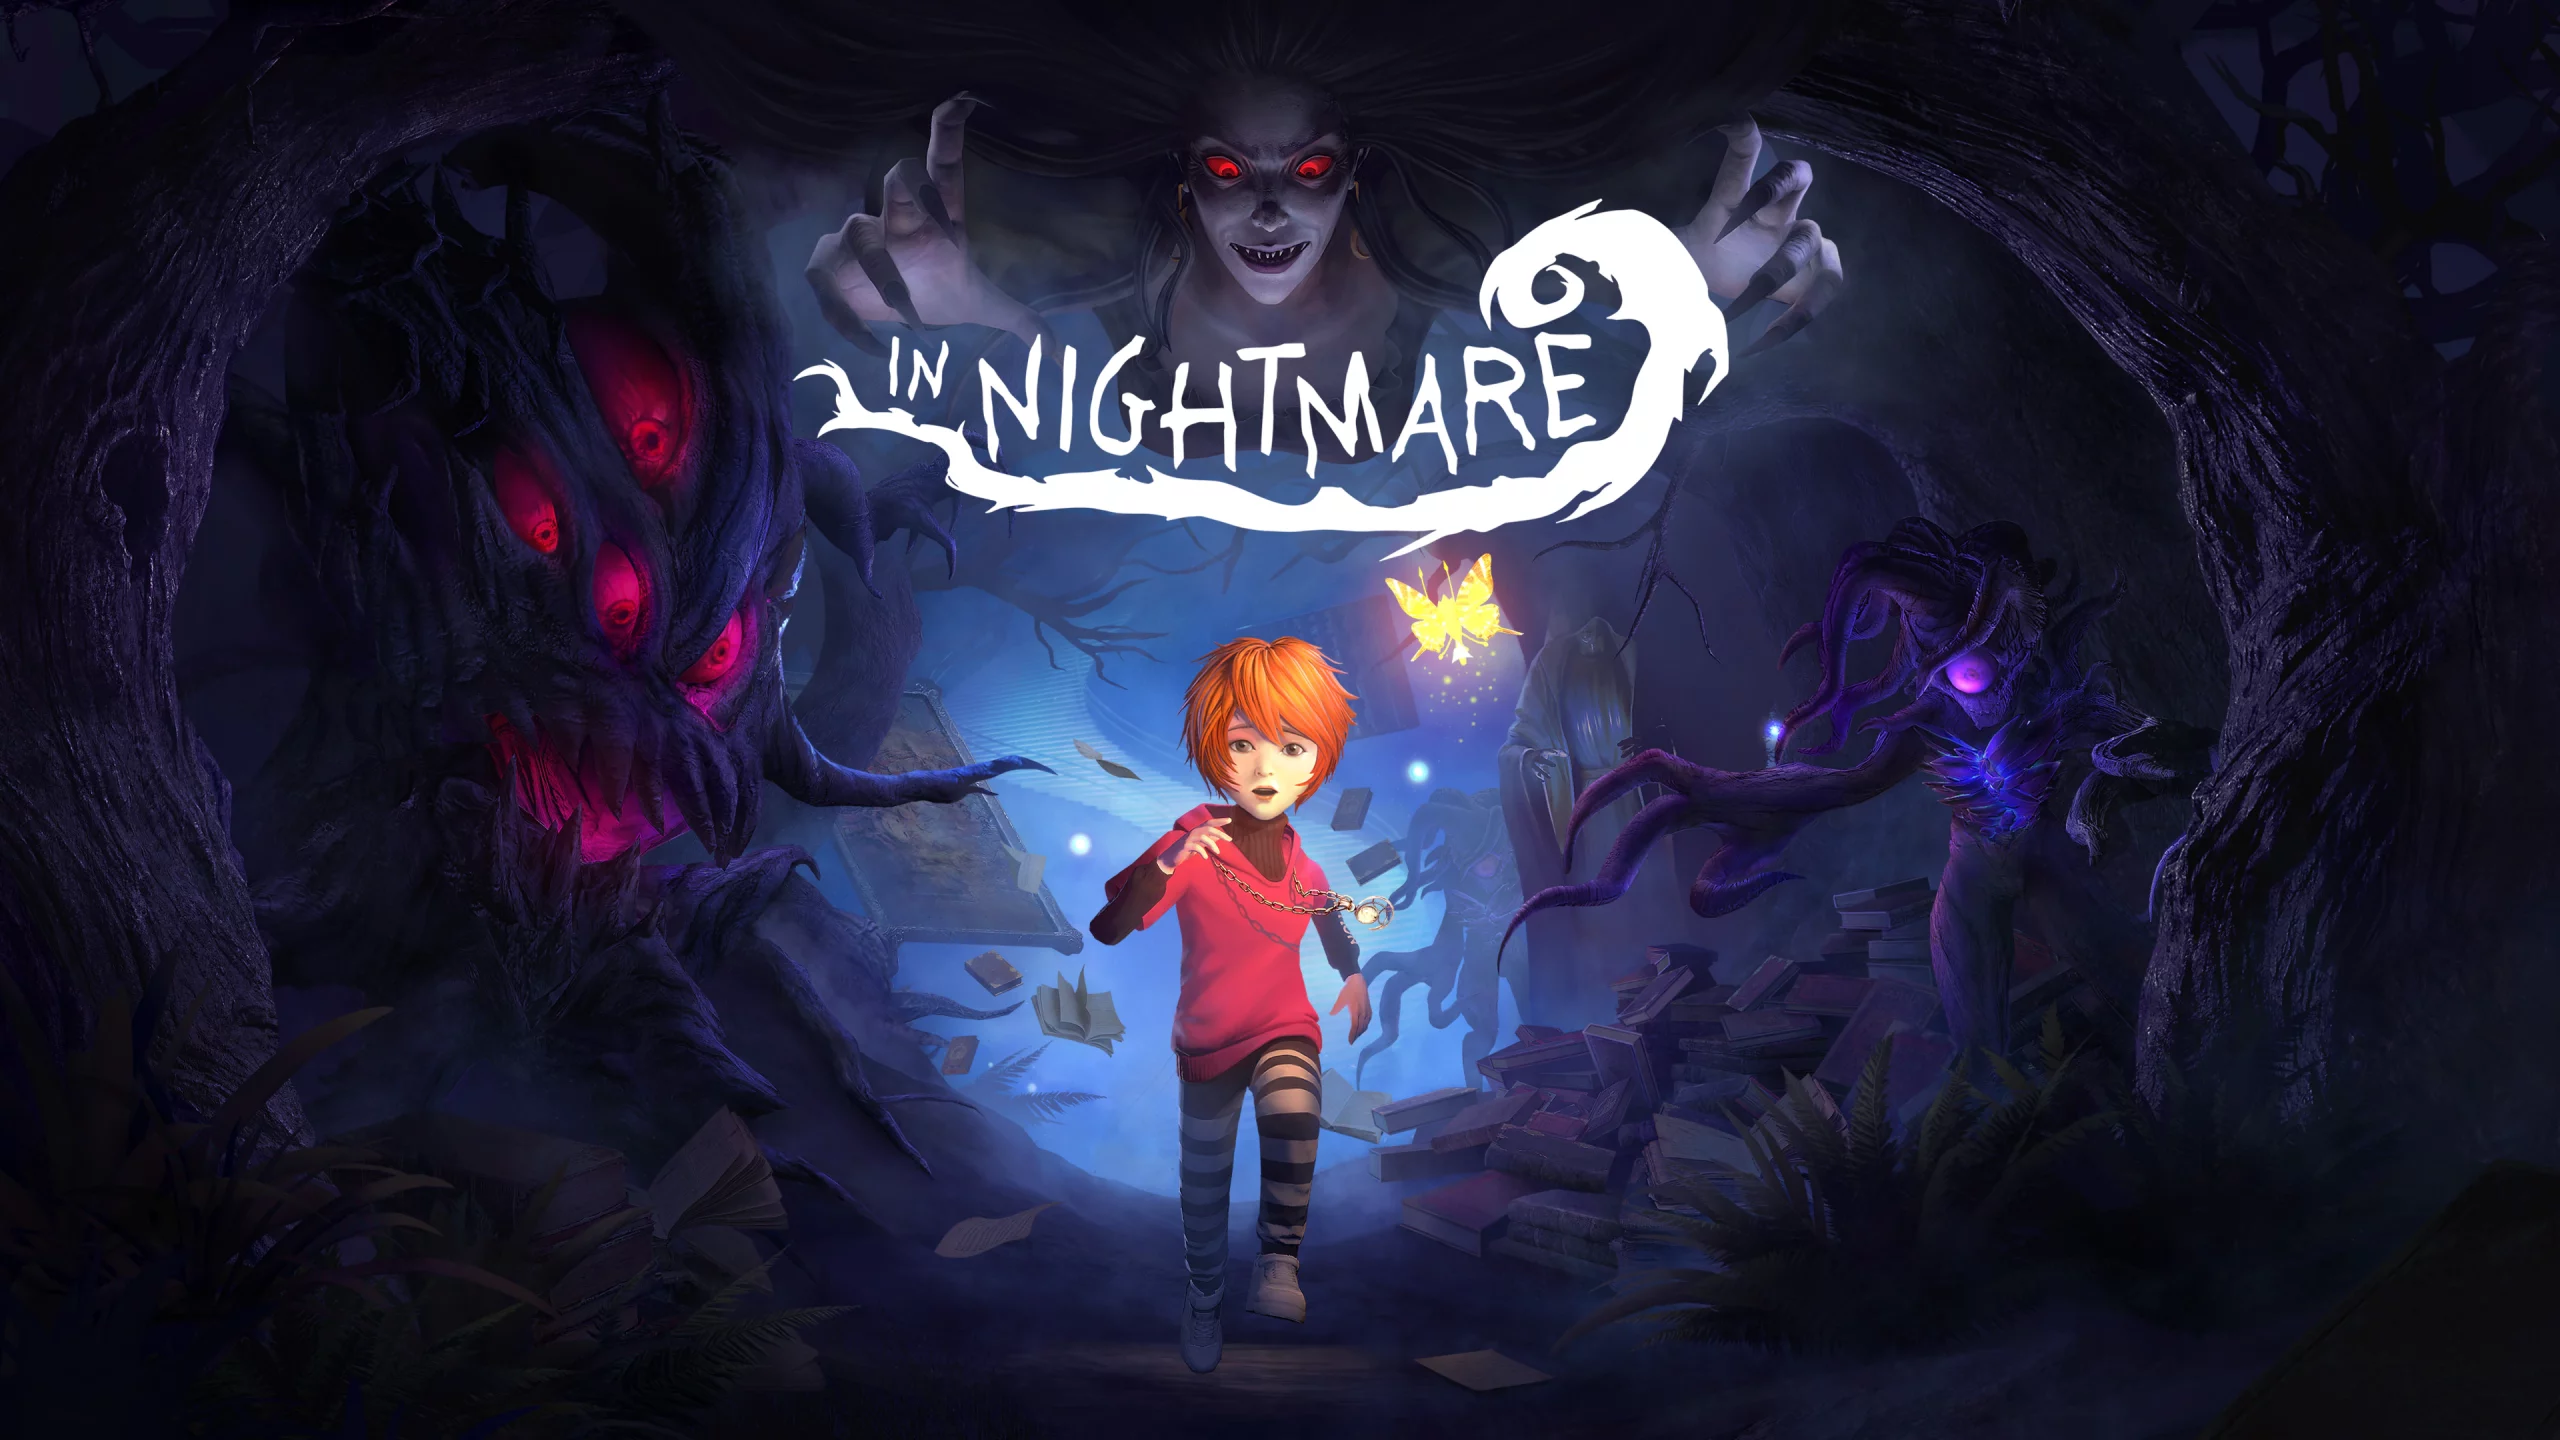 In Nightmare - Garoto fica preso em pesadelo onde enfrenta monstros assustadores 